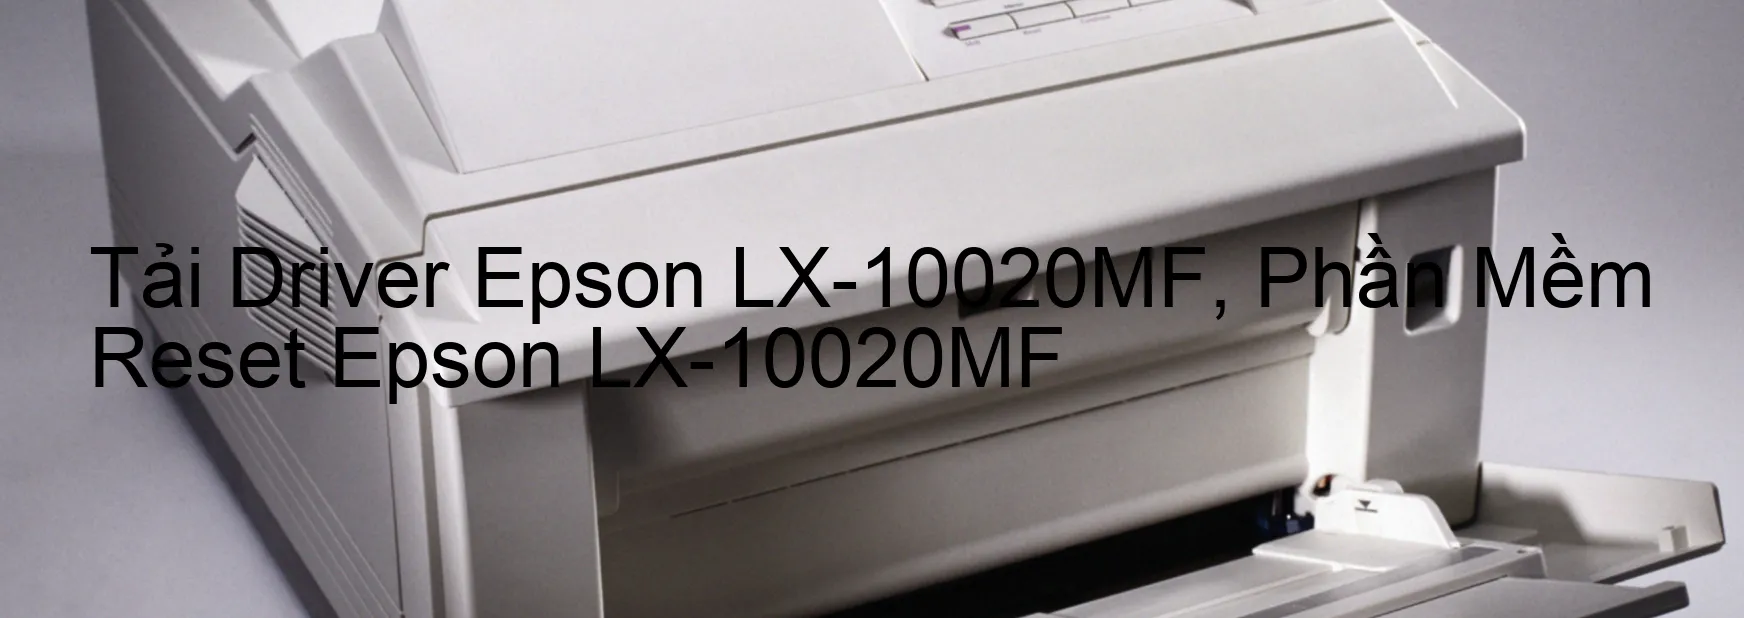 Driver Epson LX-10020MF, Phần Mềm Reset Epson LX-10020MF